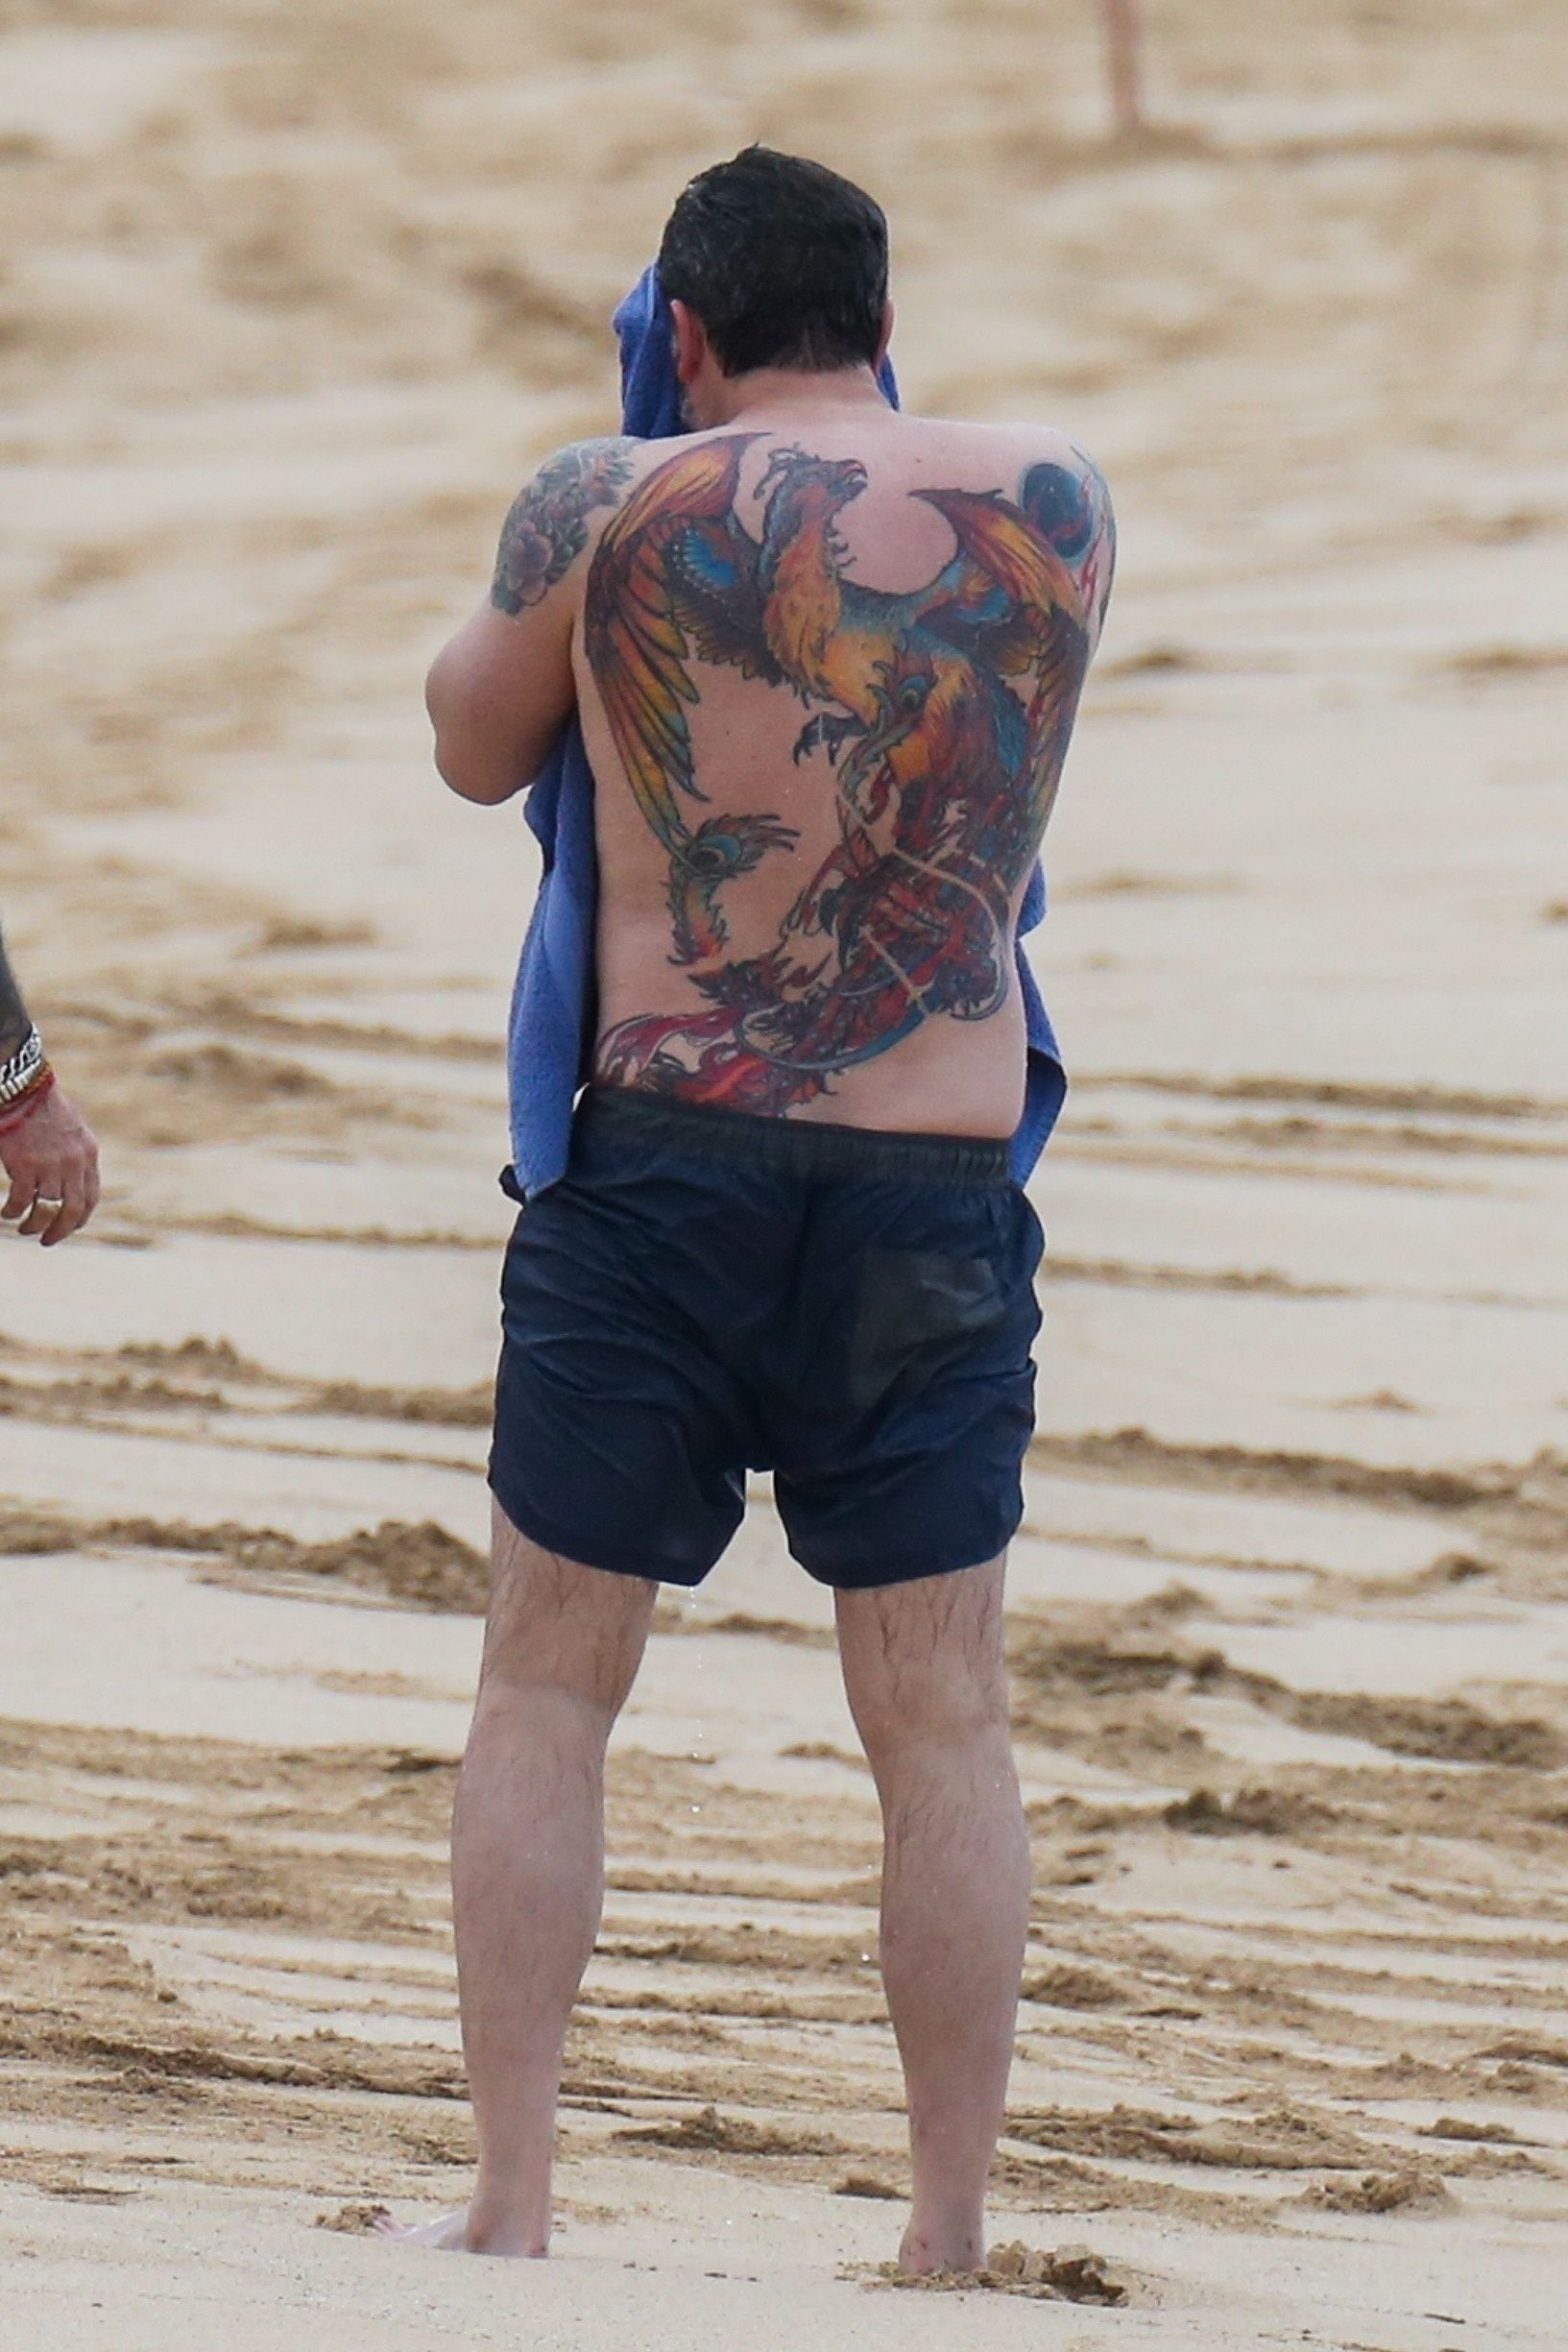 Ben Affleck And Jennifer Lopez Unveiled Matching Tattoos